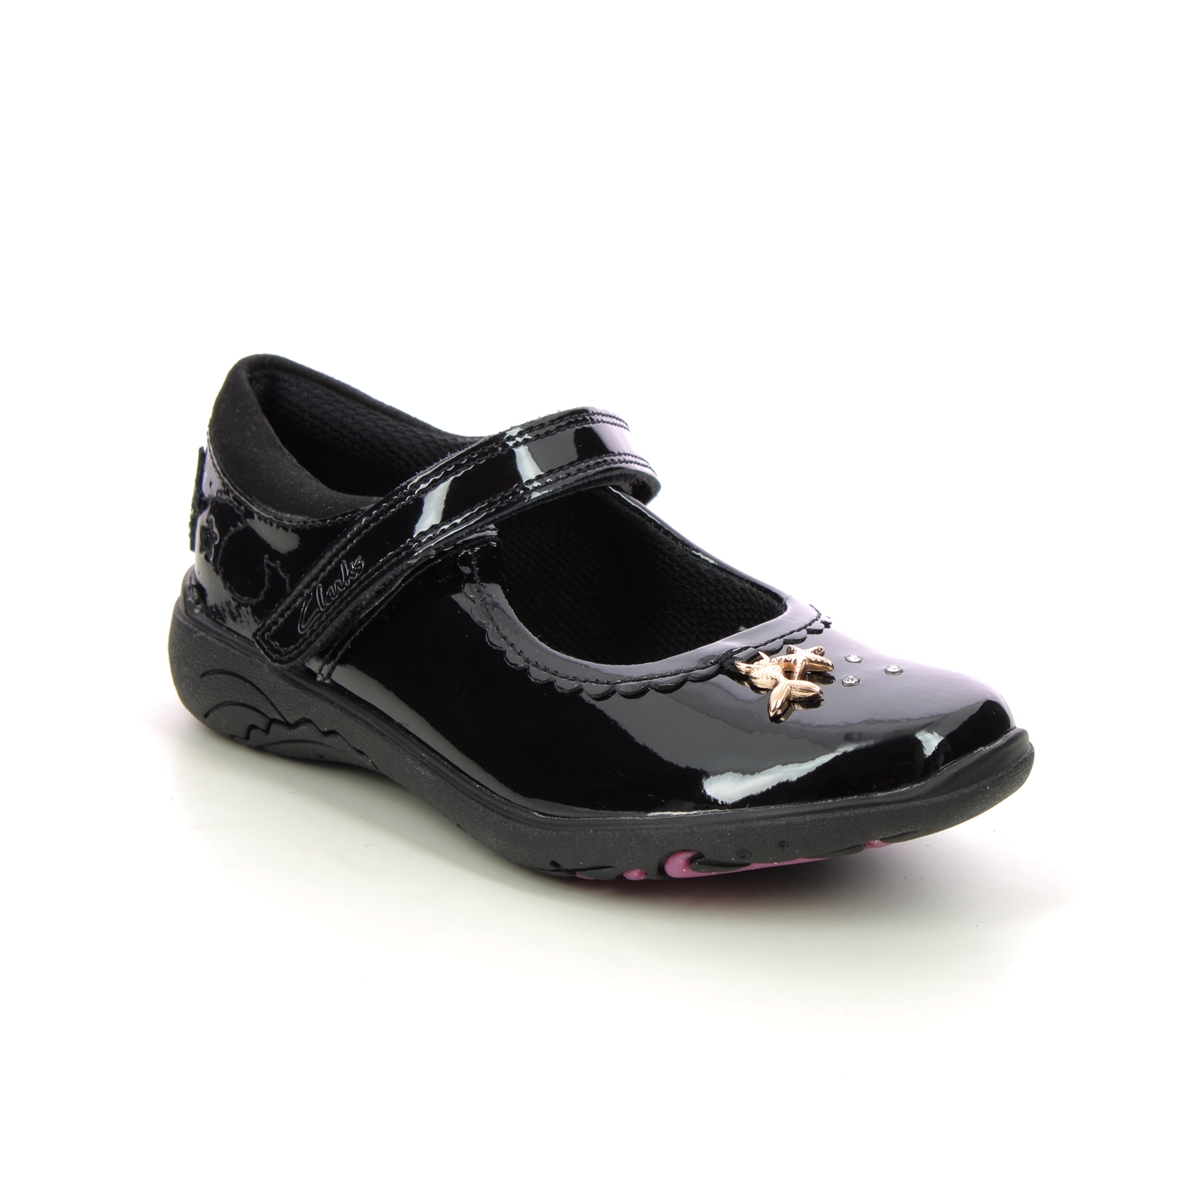 Clarks Relda Sea K Mary Jane Black Patent Kids Girls School Shoes 722417G In Size 2.5 In Plain Black Patent G Width Fitting For School For kids